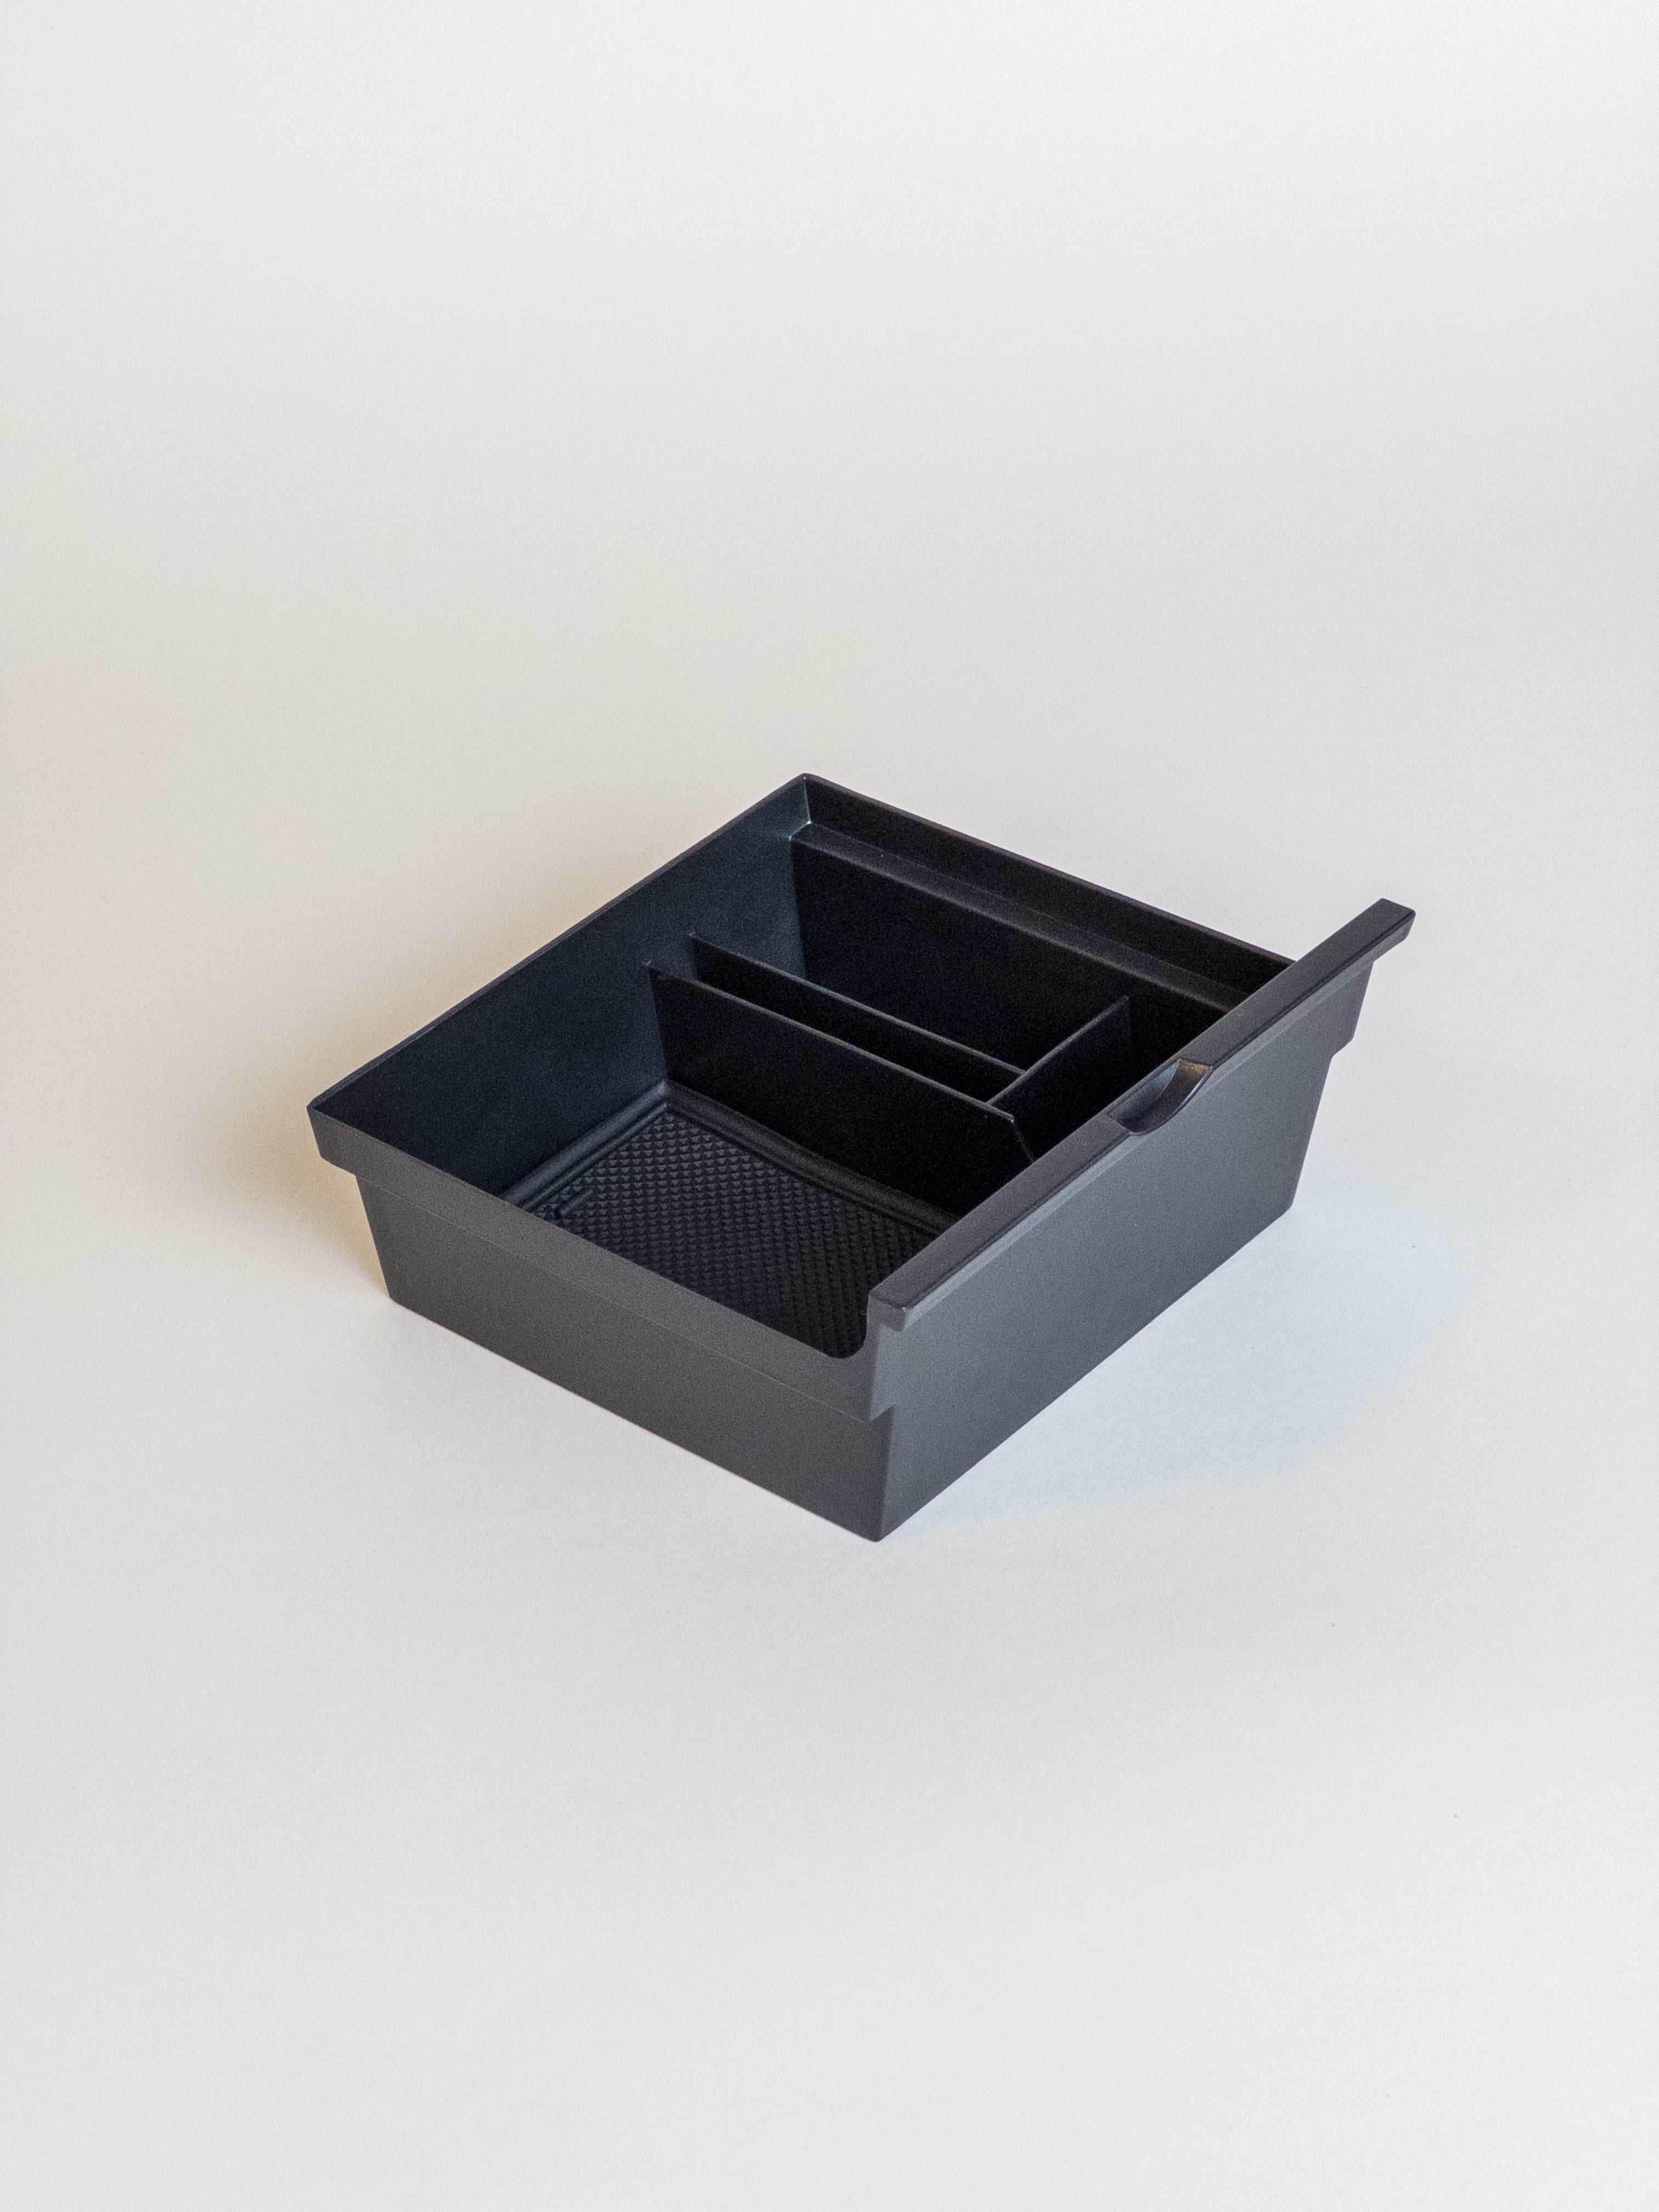 Model 3 & Y facelift storage box rubber